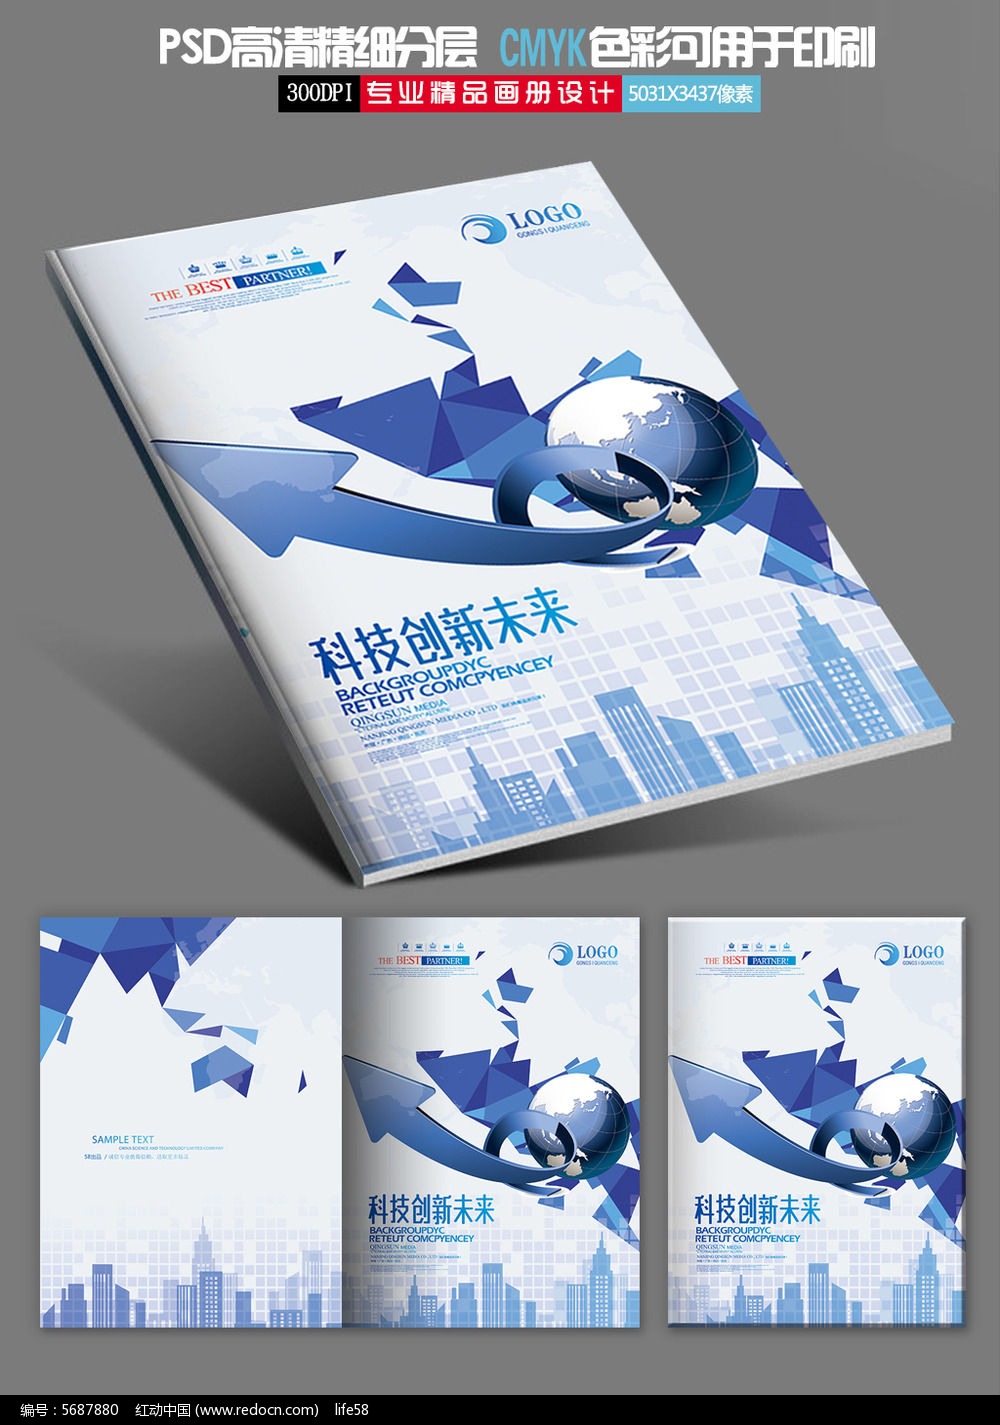 【psd】蓝色地球科技画册封面样本设计模板_图片编号:wli1114044_产品